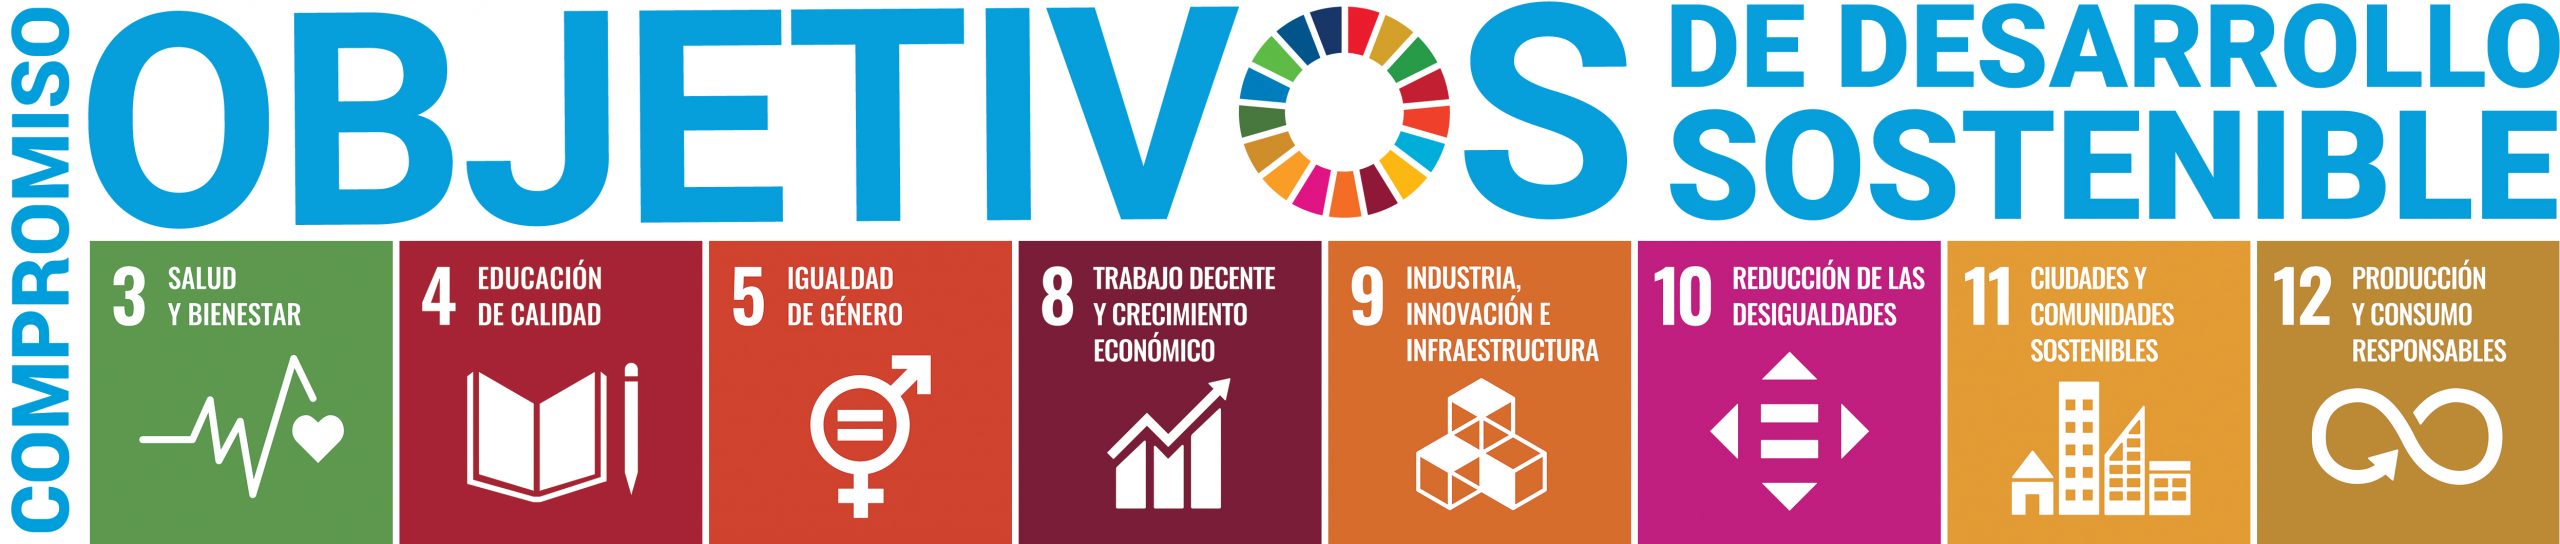 Banner ODS (Objetivos de desarrolllo sostenible)